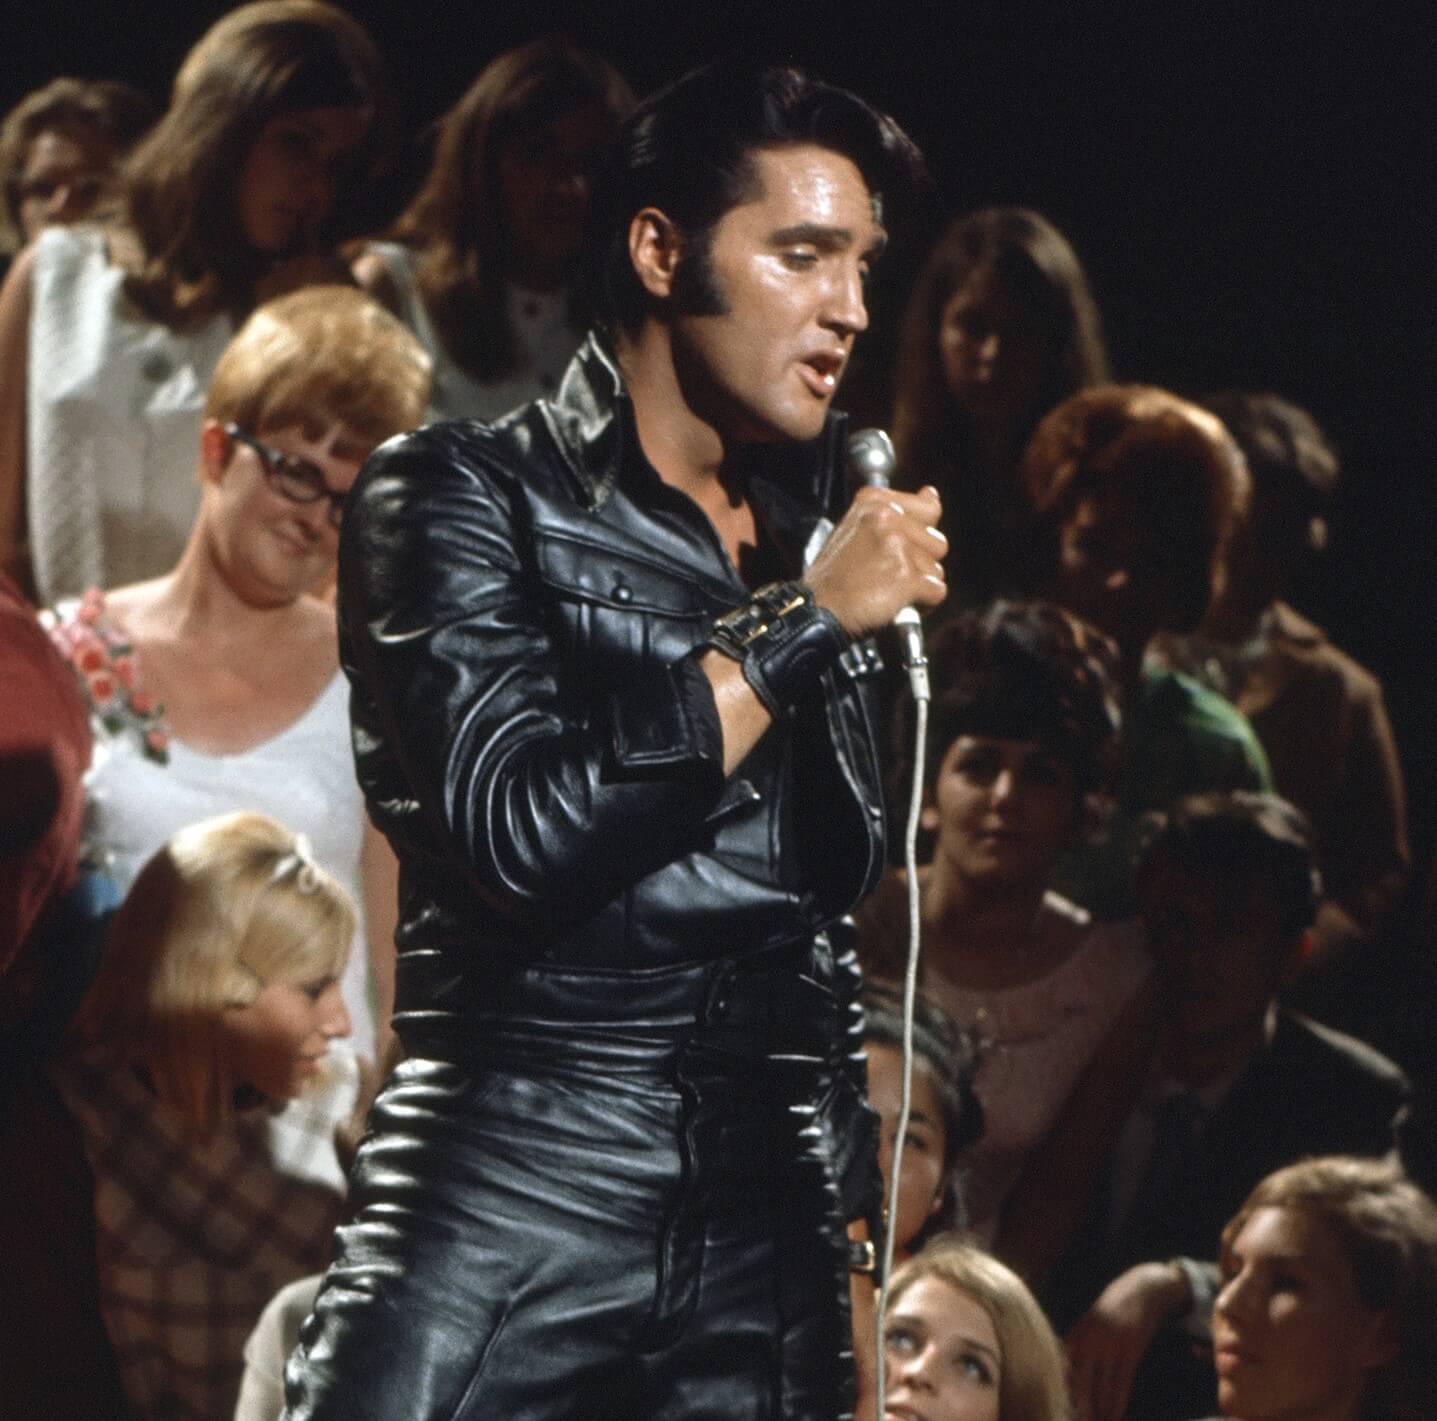 "In the Ghetto" singer Elvis Presley wearing black